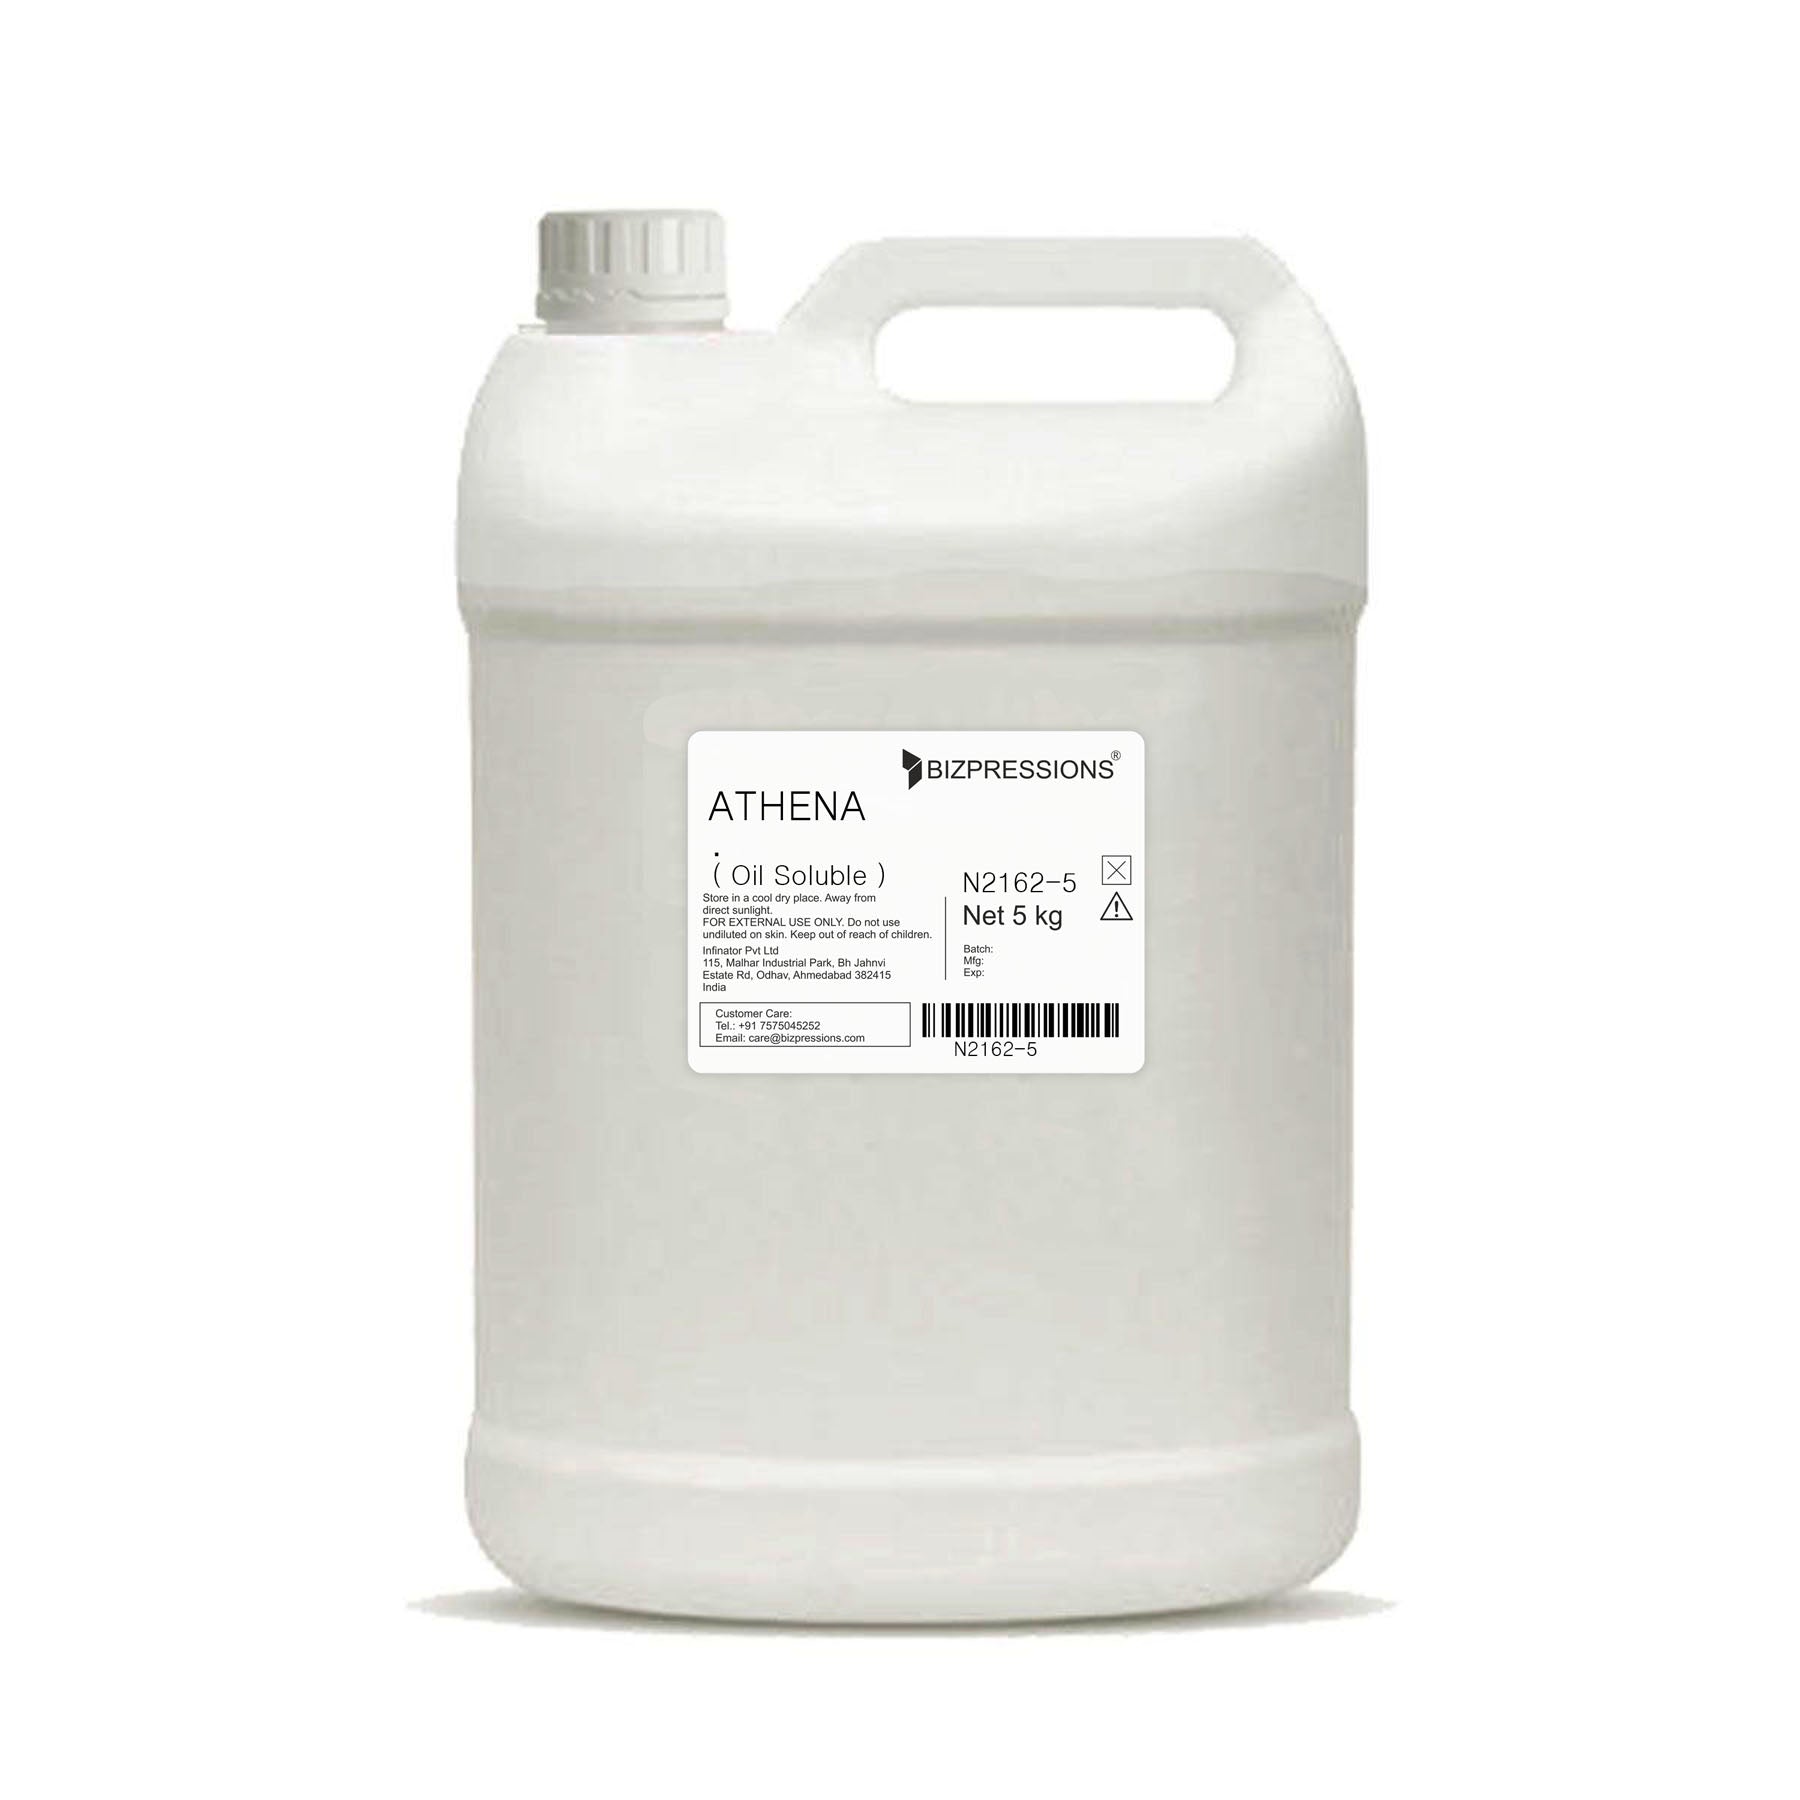 ATHENA - Fragrance ( Oil Soluble ) - 5 kg